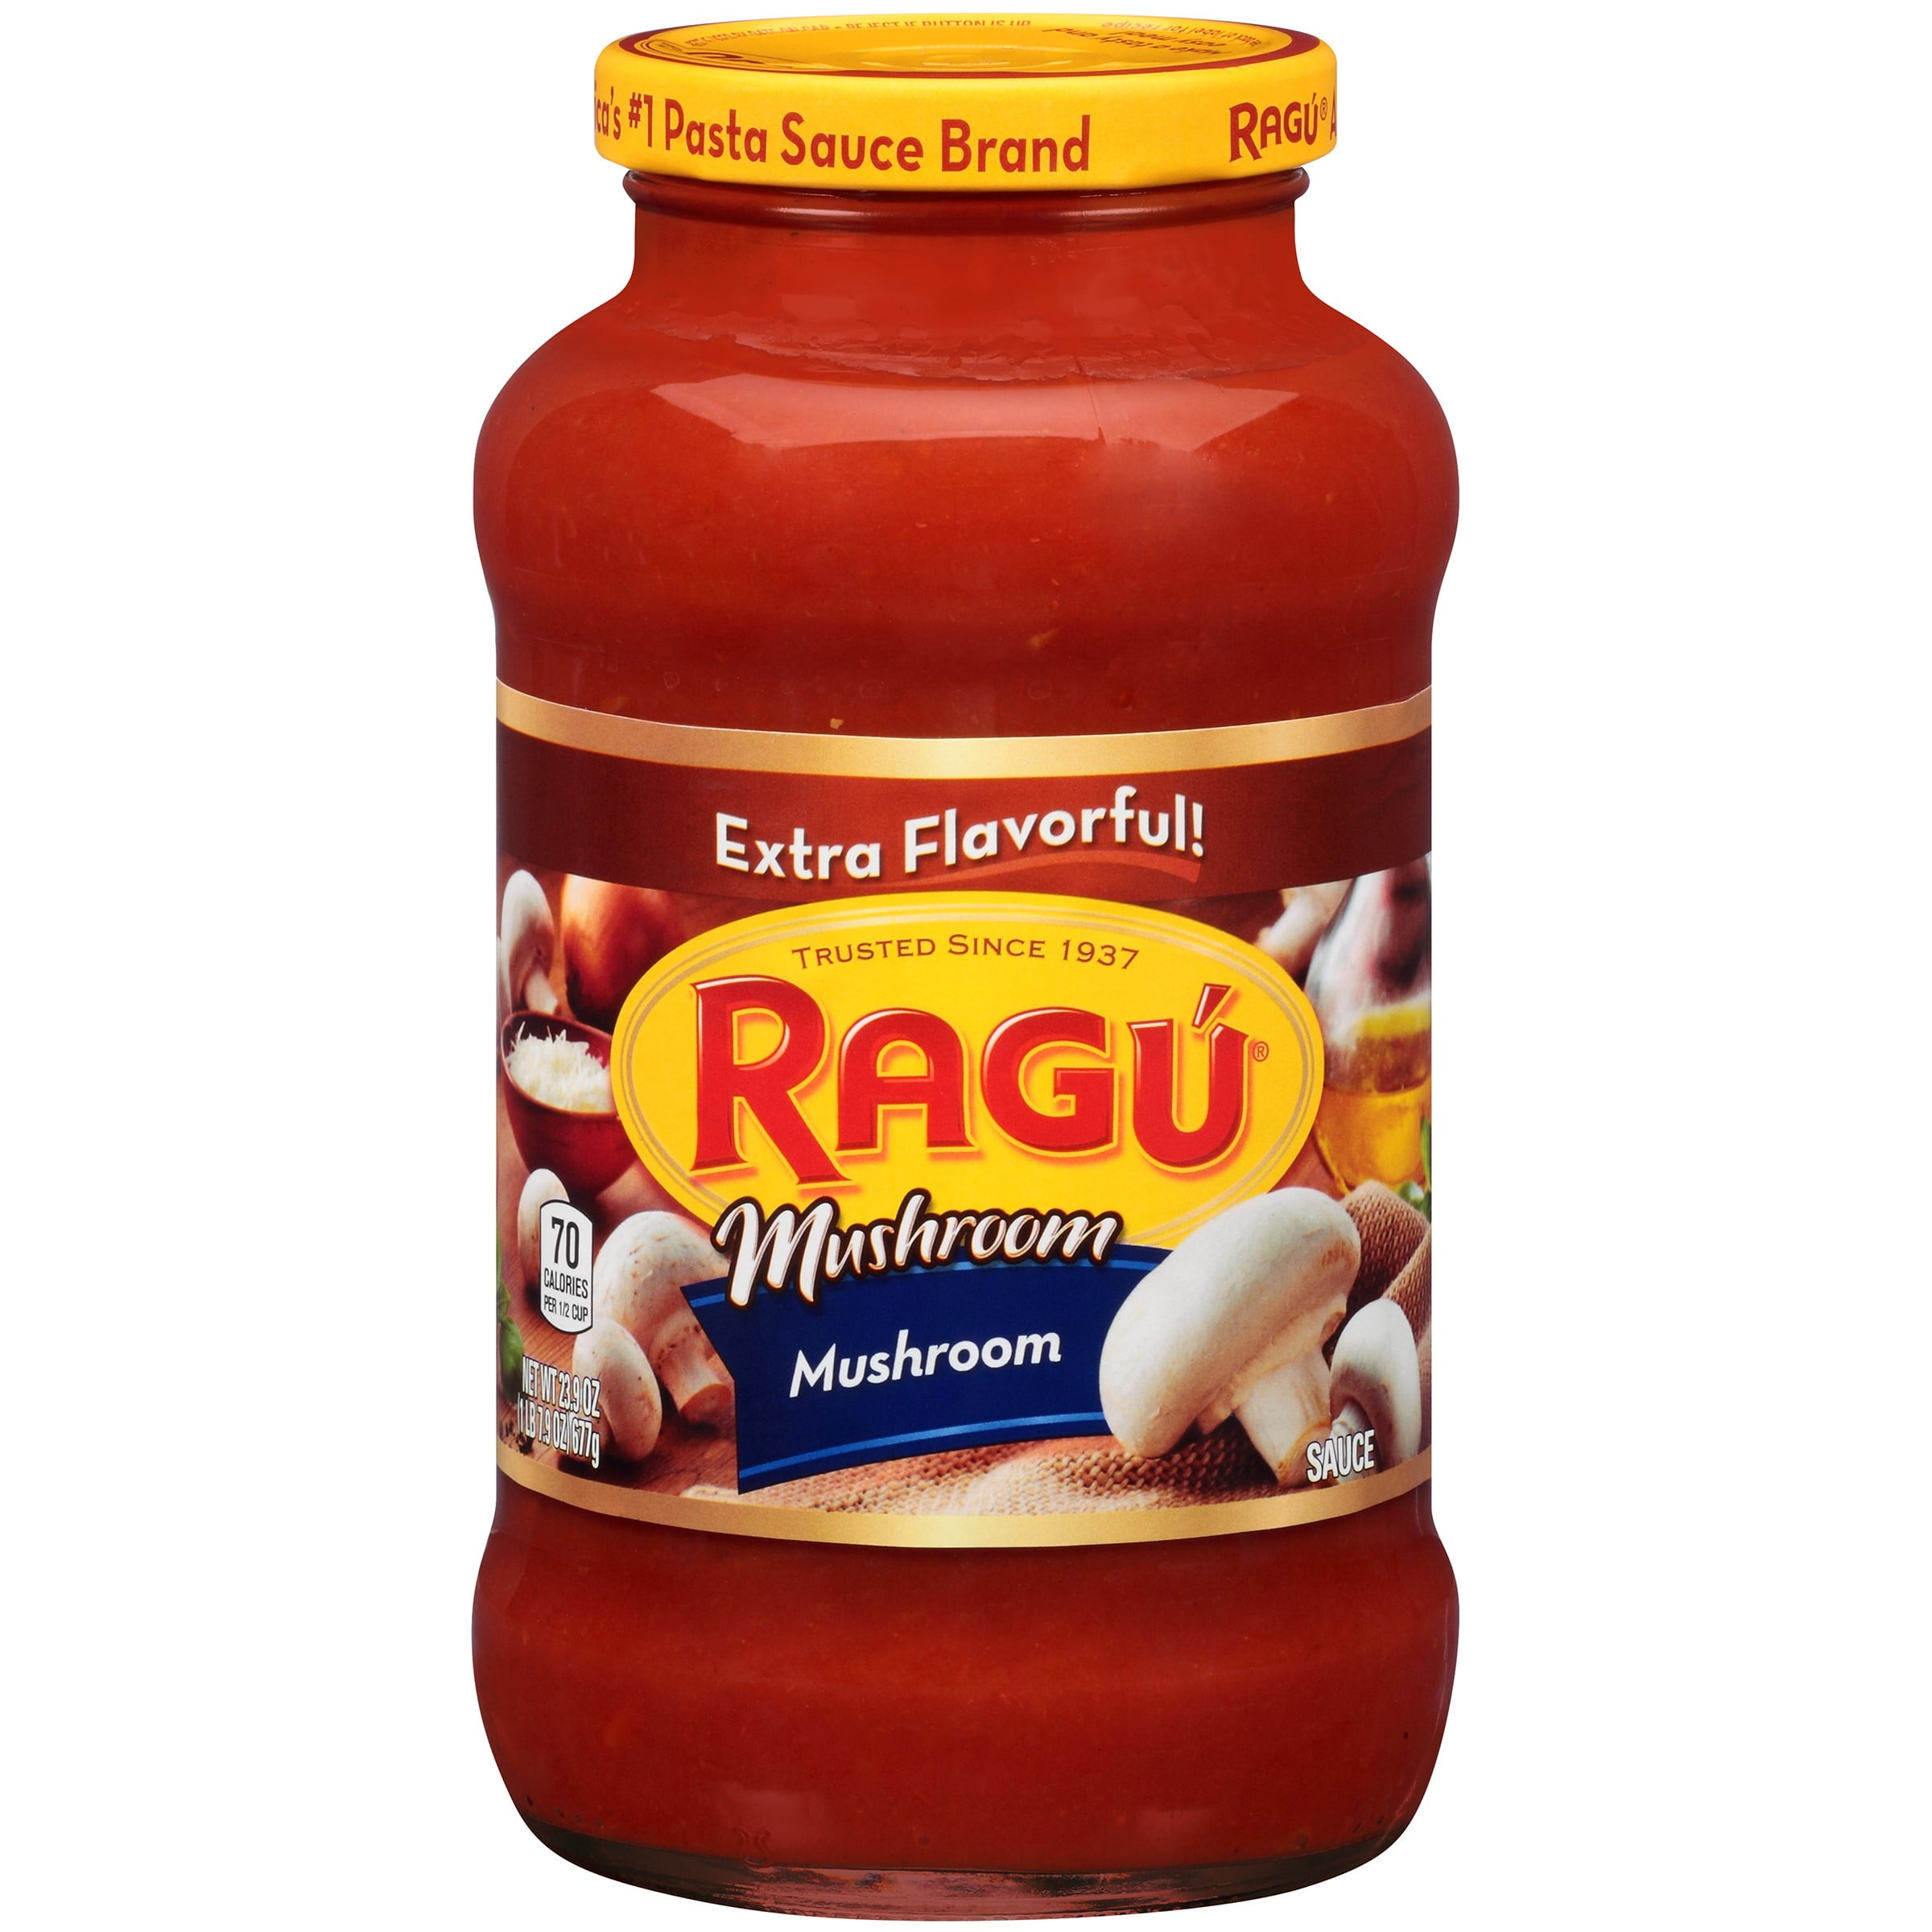 Ragu Old World Style Mushroom Pasta Sauce 24 oz. - Walmart.com